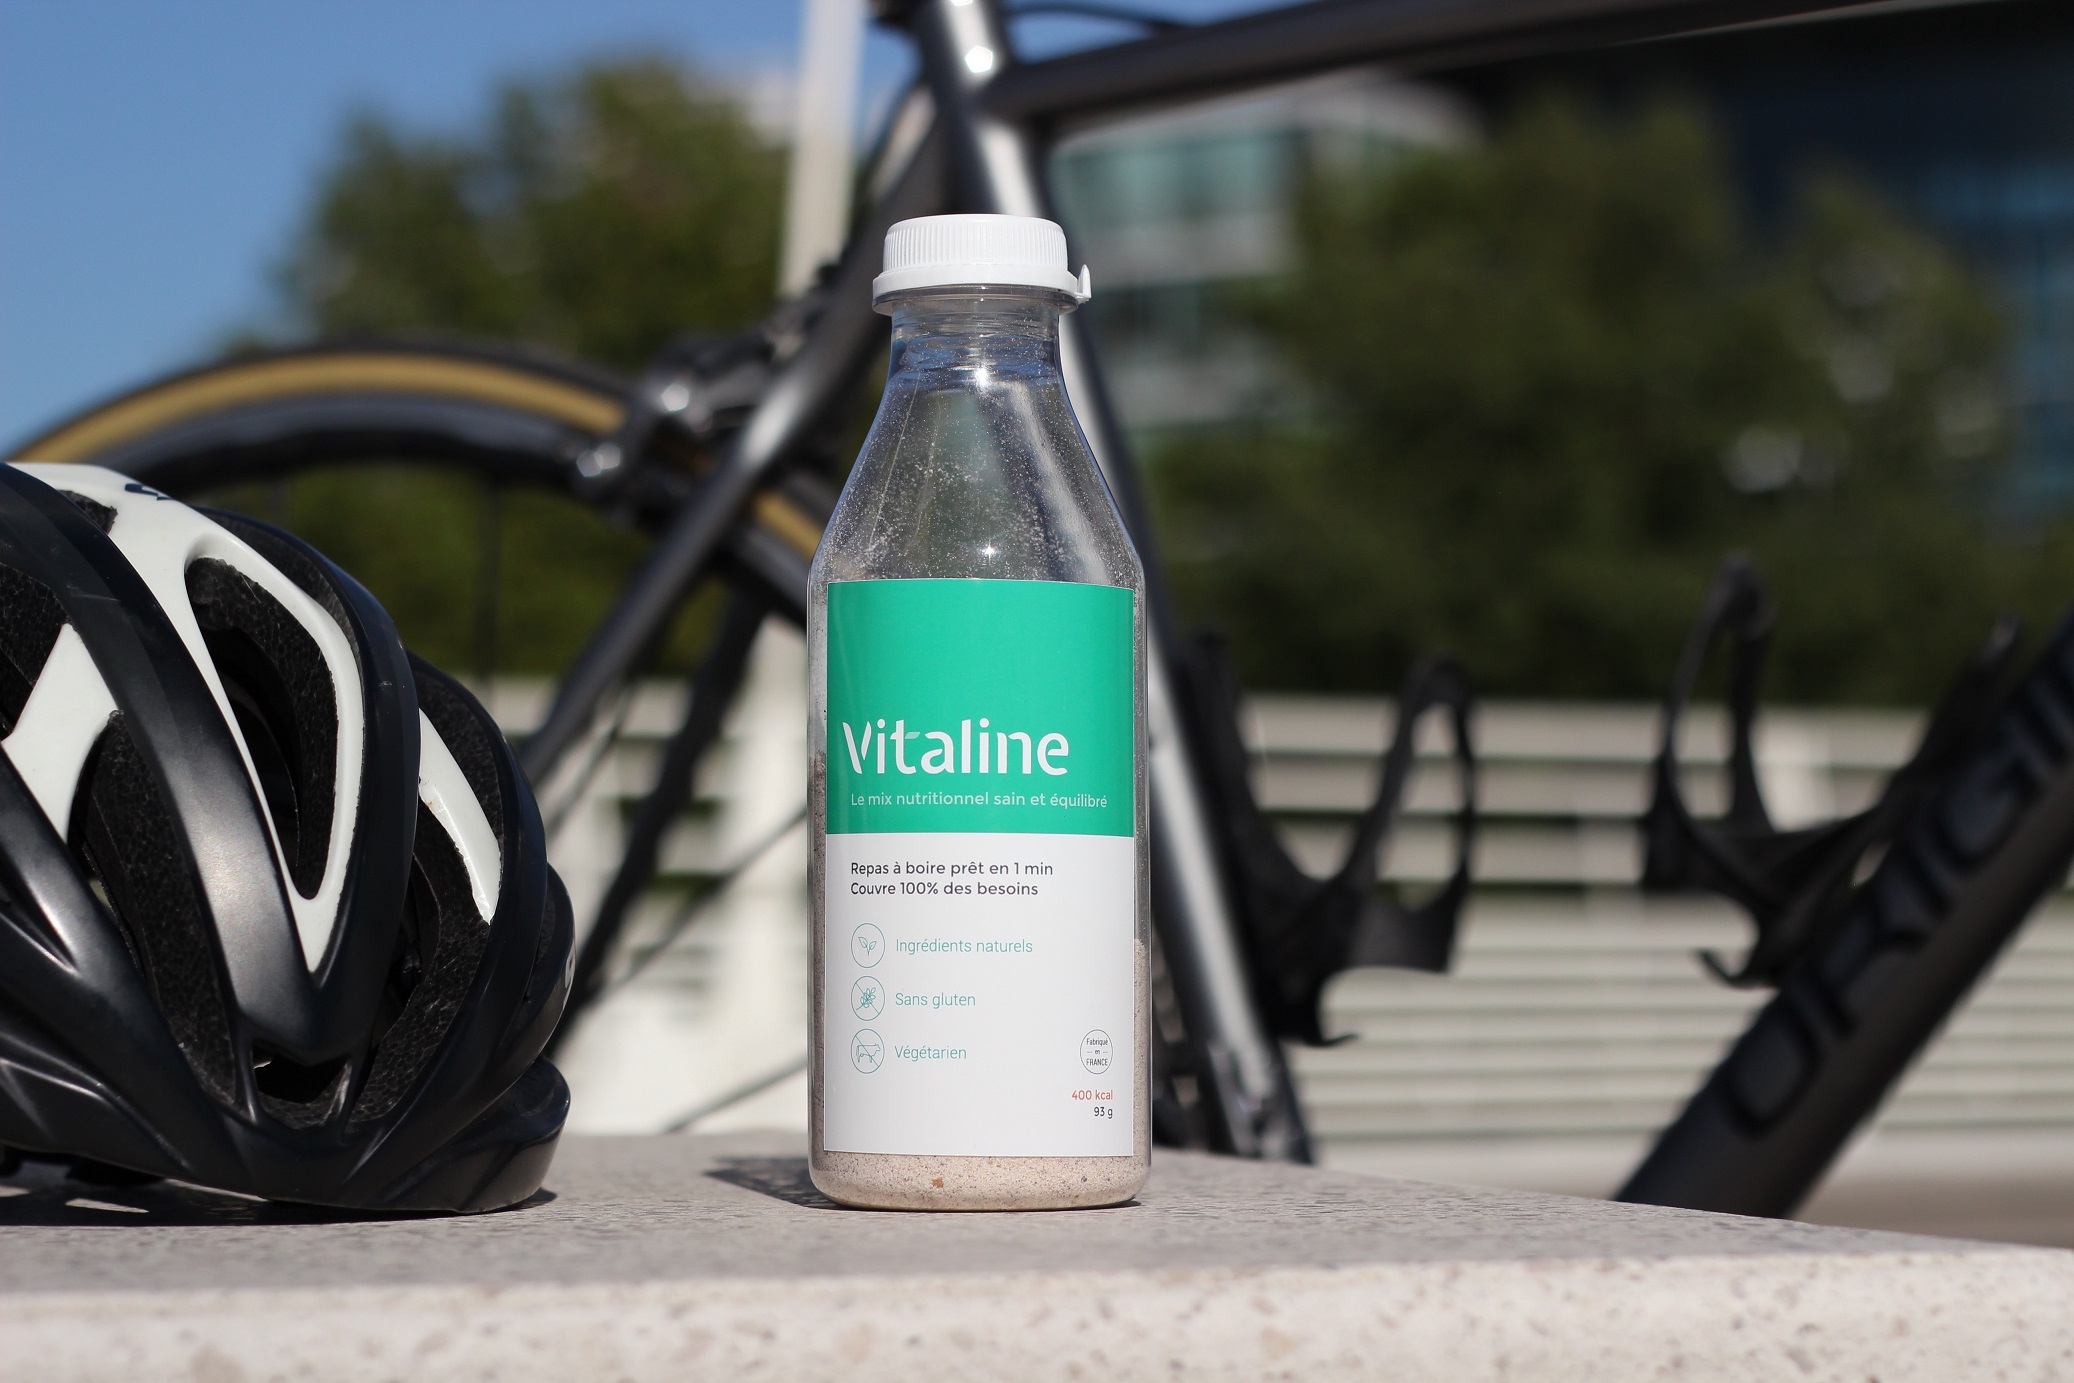 Vitaline - Full Meal in a Bottle for an Optimal Nutrition